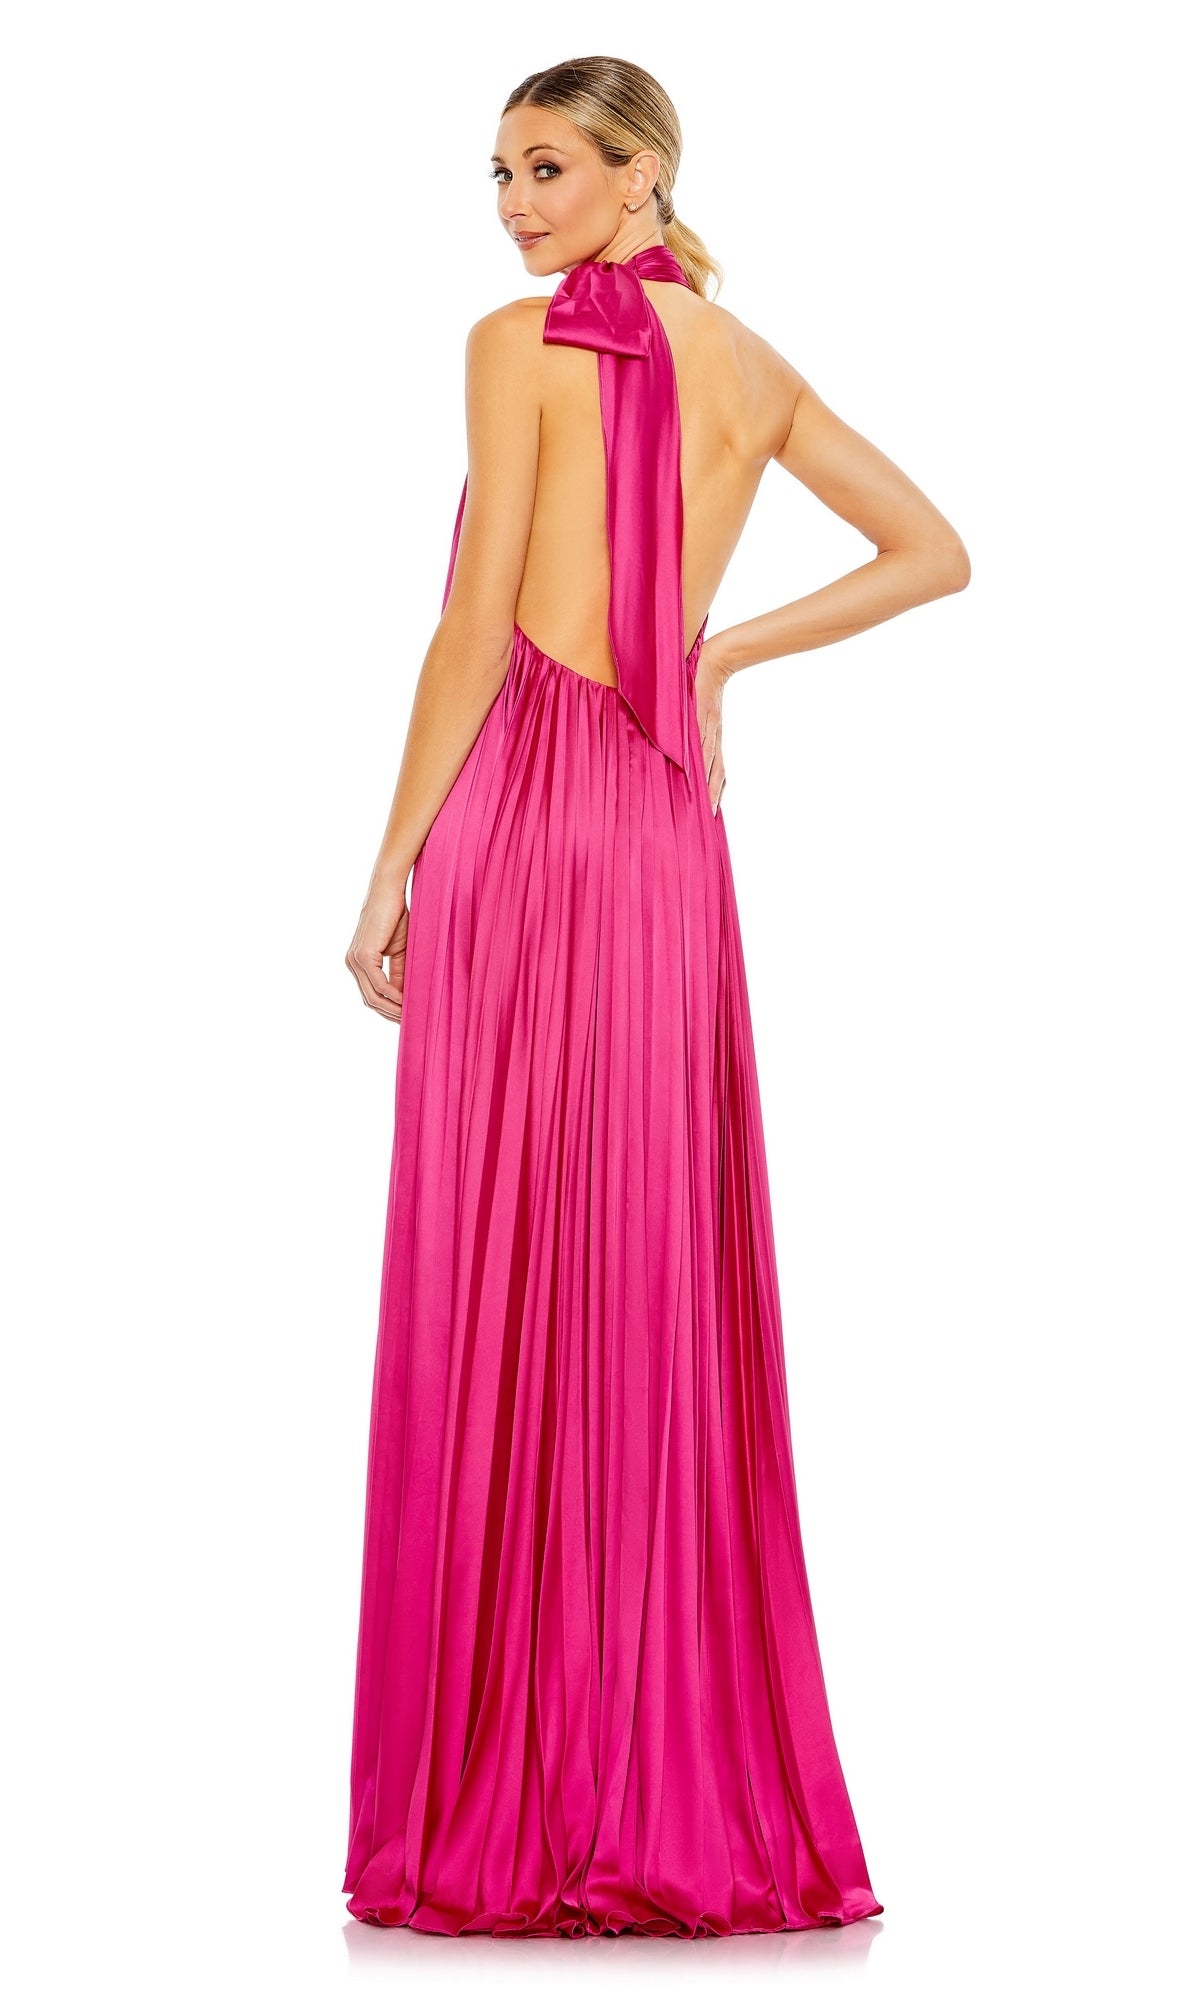 Long Formal Dress 26926 by Mac Duggal